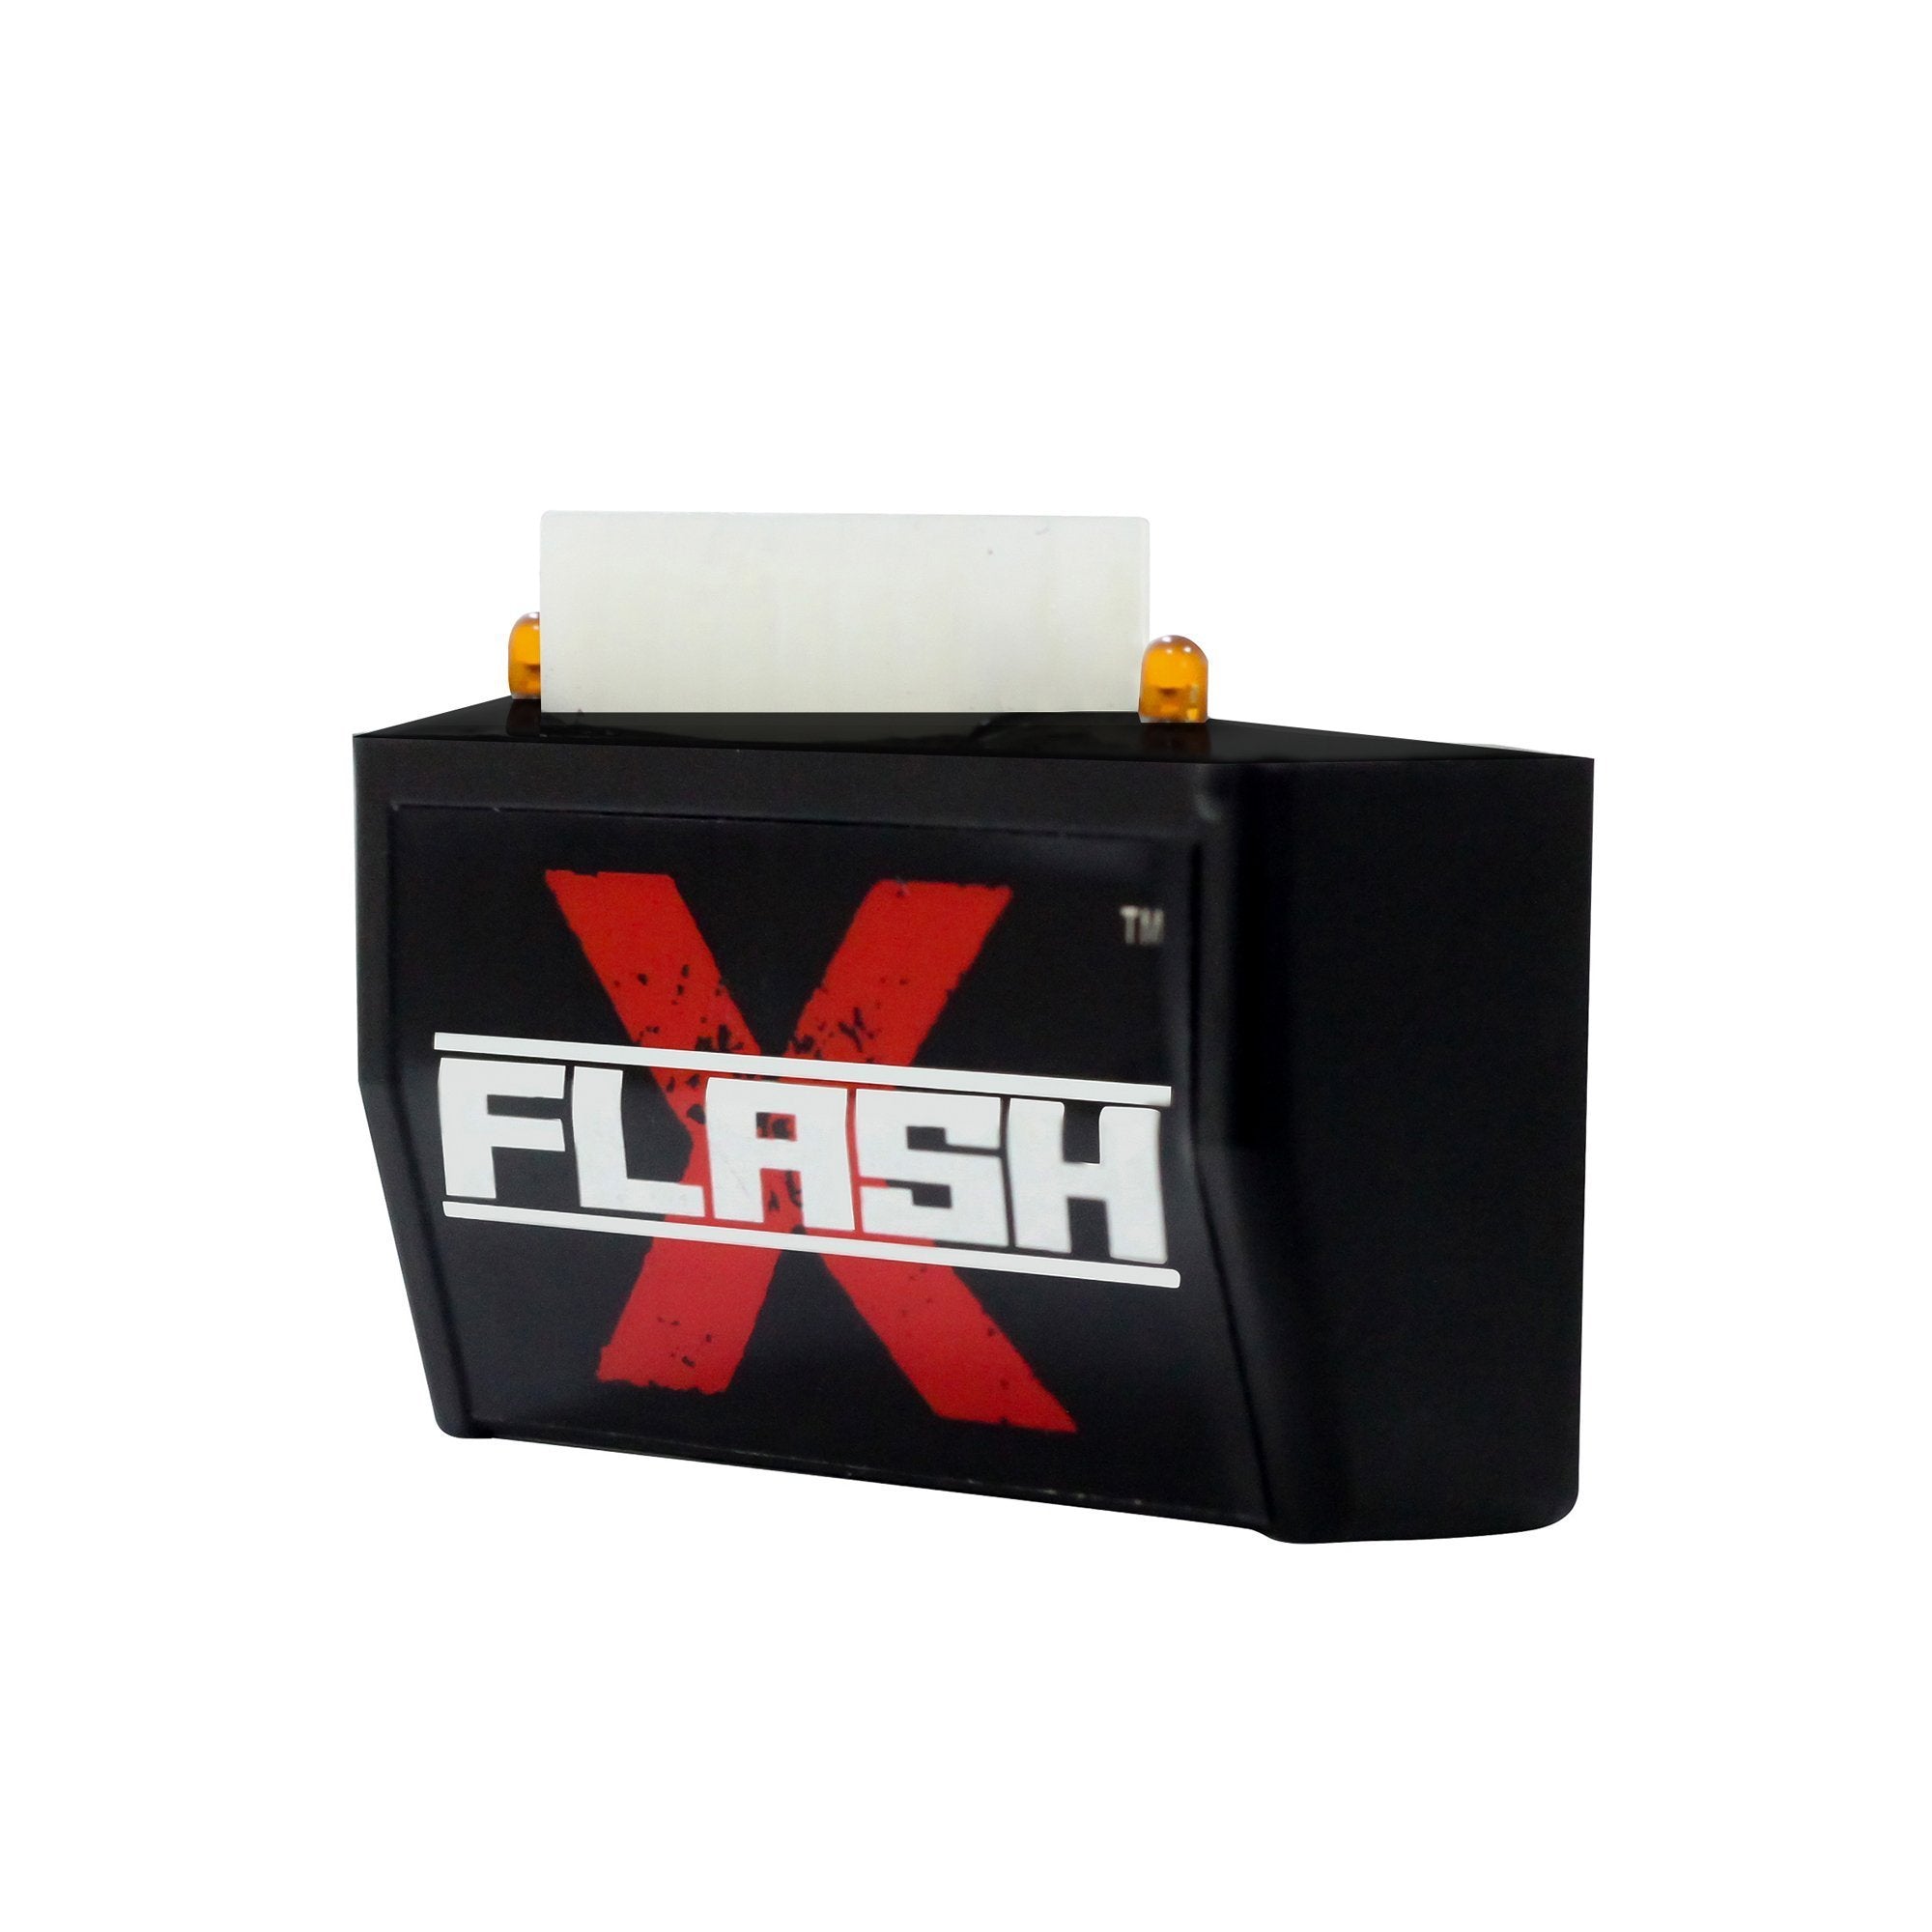 Dominar 250 FlashX Hazard Flash Module, Blinker/Flasher - LRL Motors